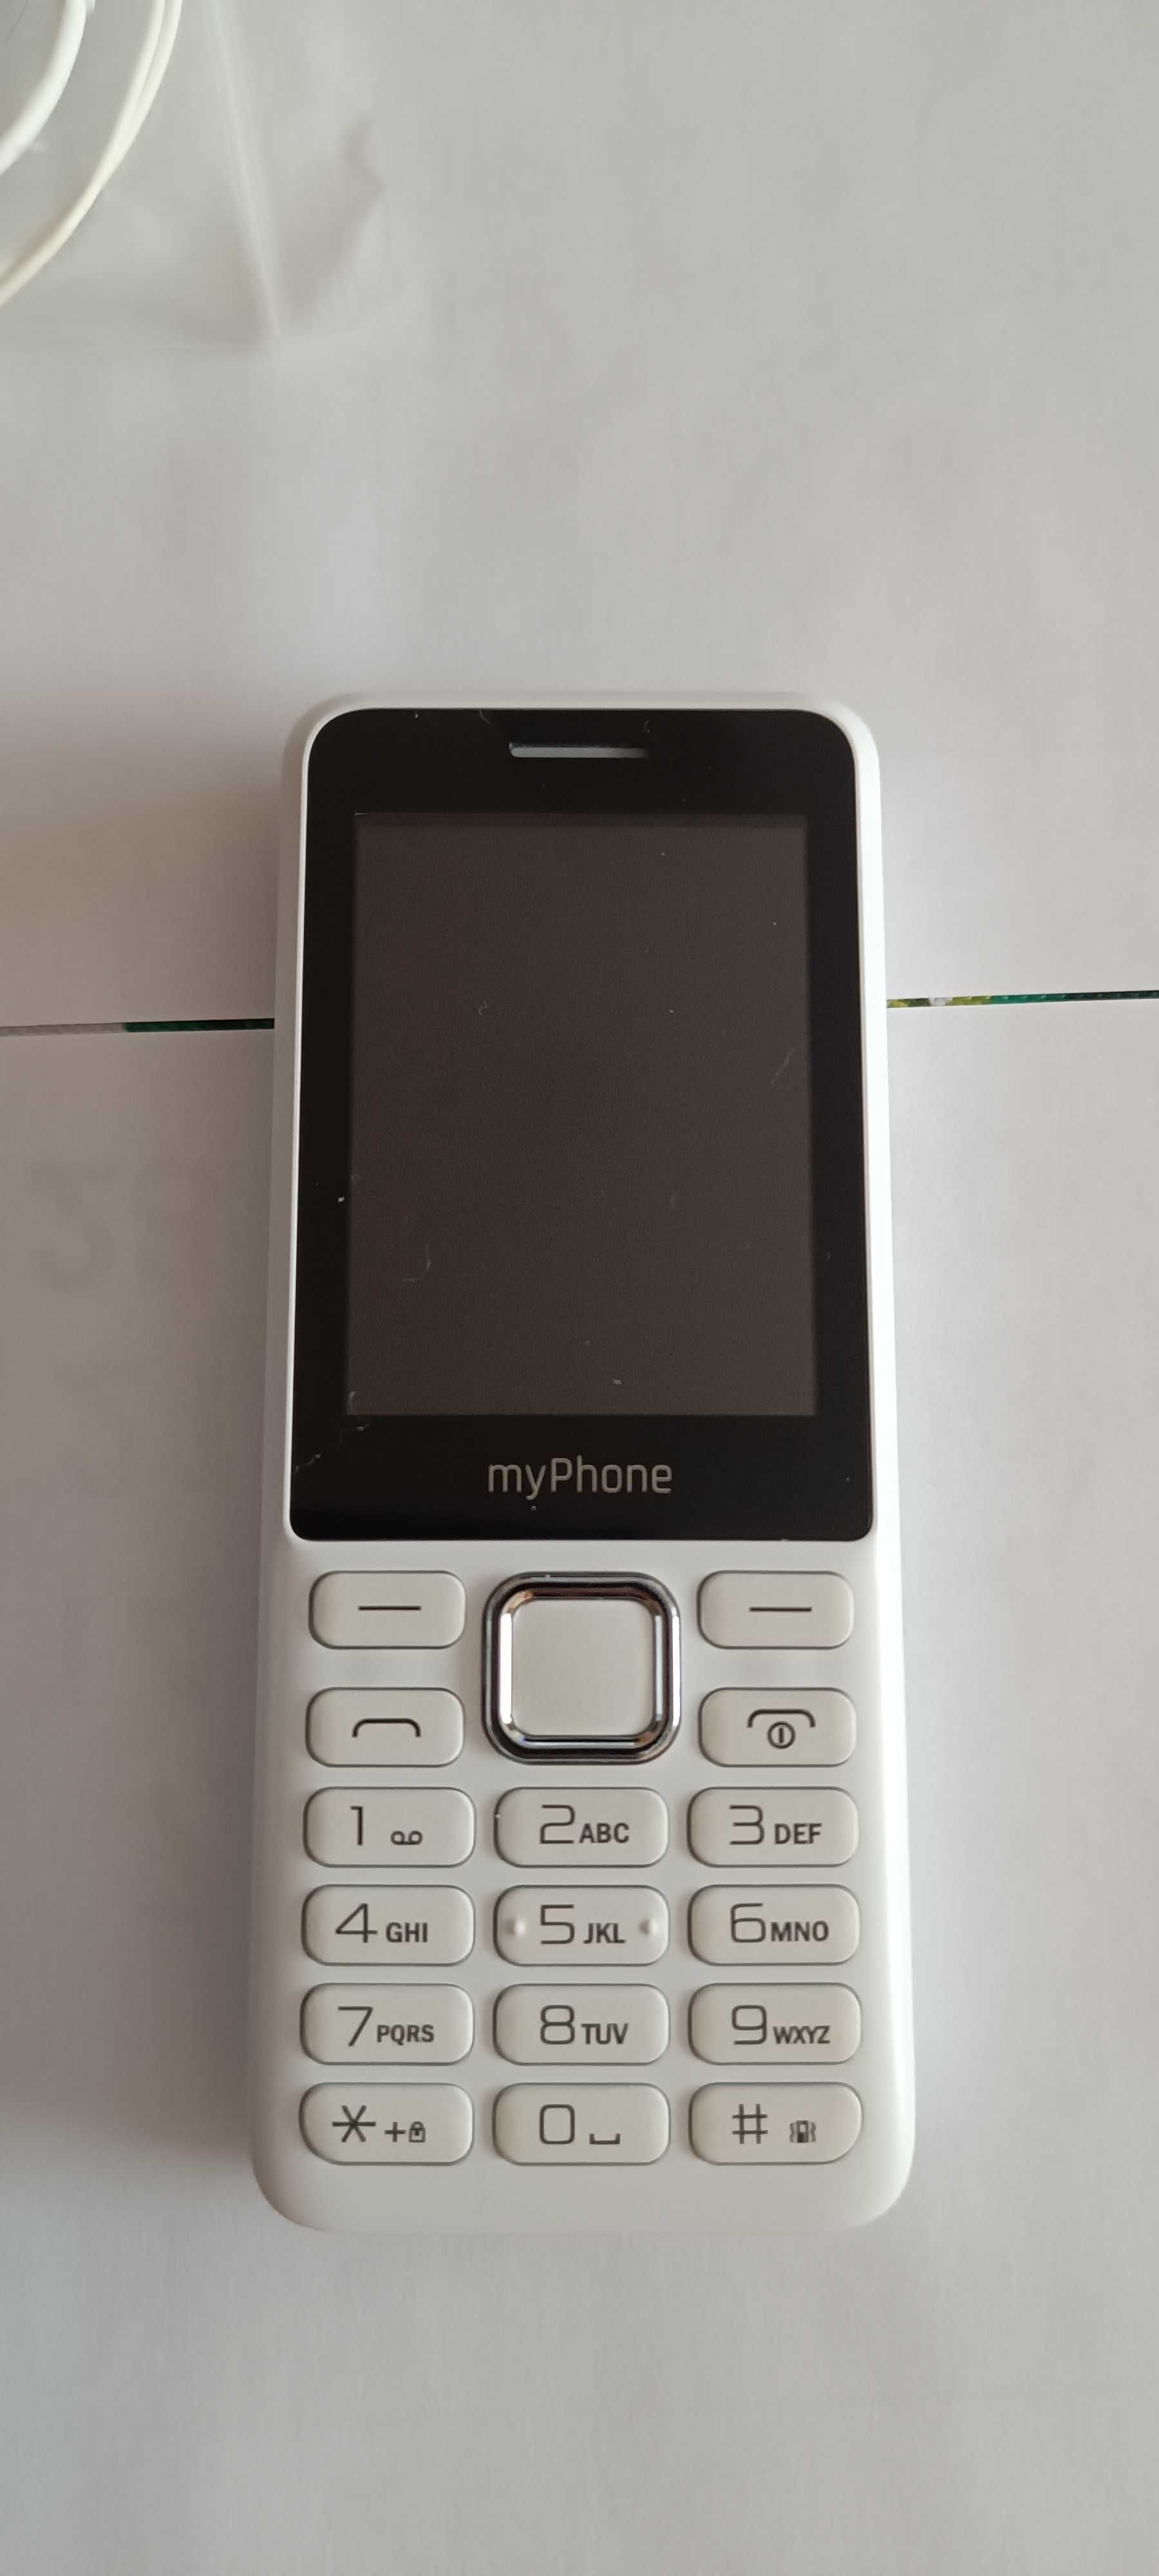 myPhone 6310 komórka